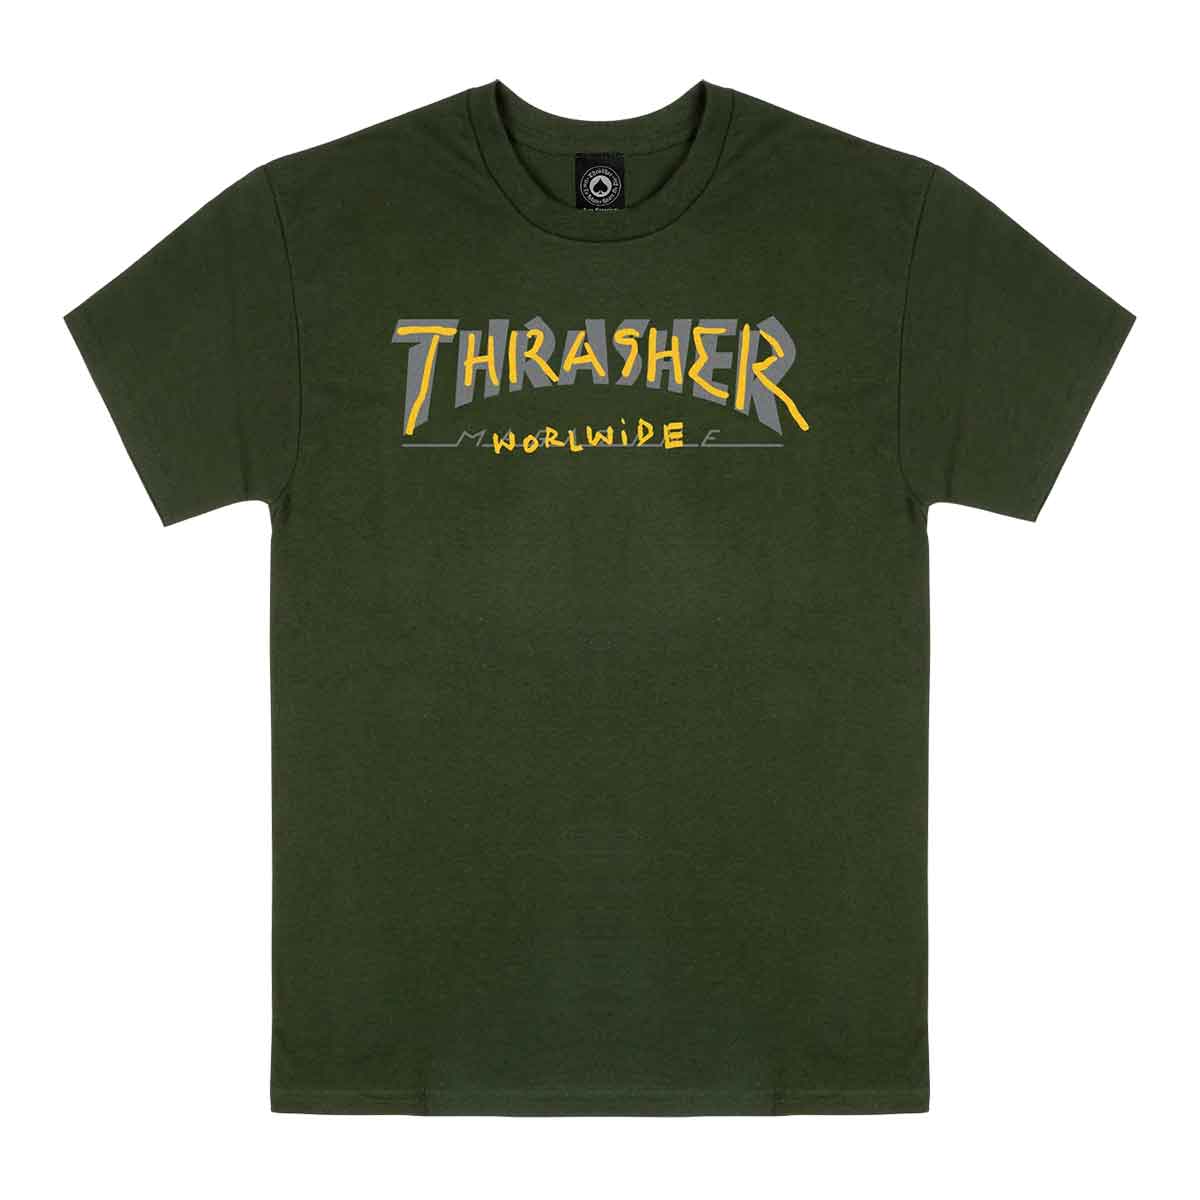 https://socalskateshop.com/mm5/graphics/00000001/39/Thrasher-Magazine-Trademark-T-Shirt-Forest-Green-1.jpg